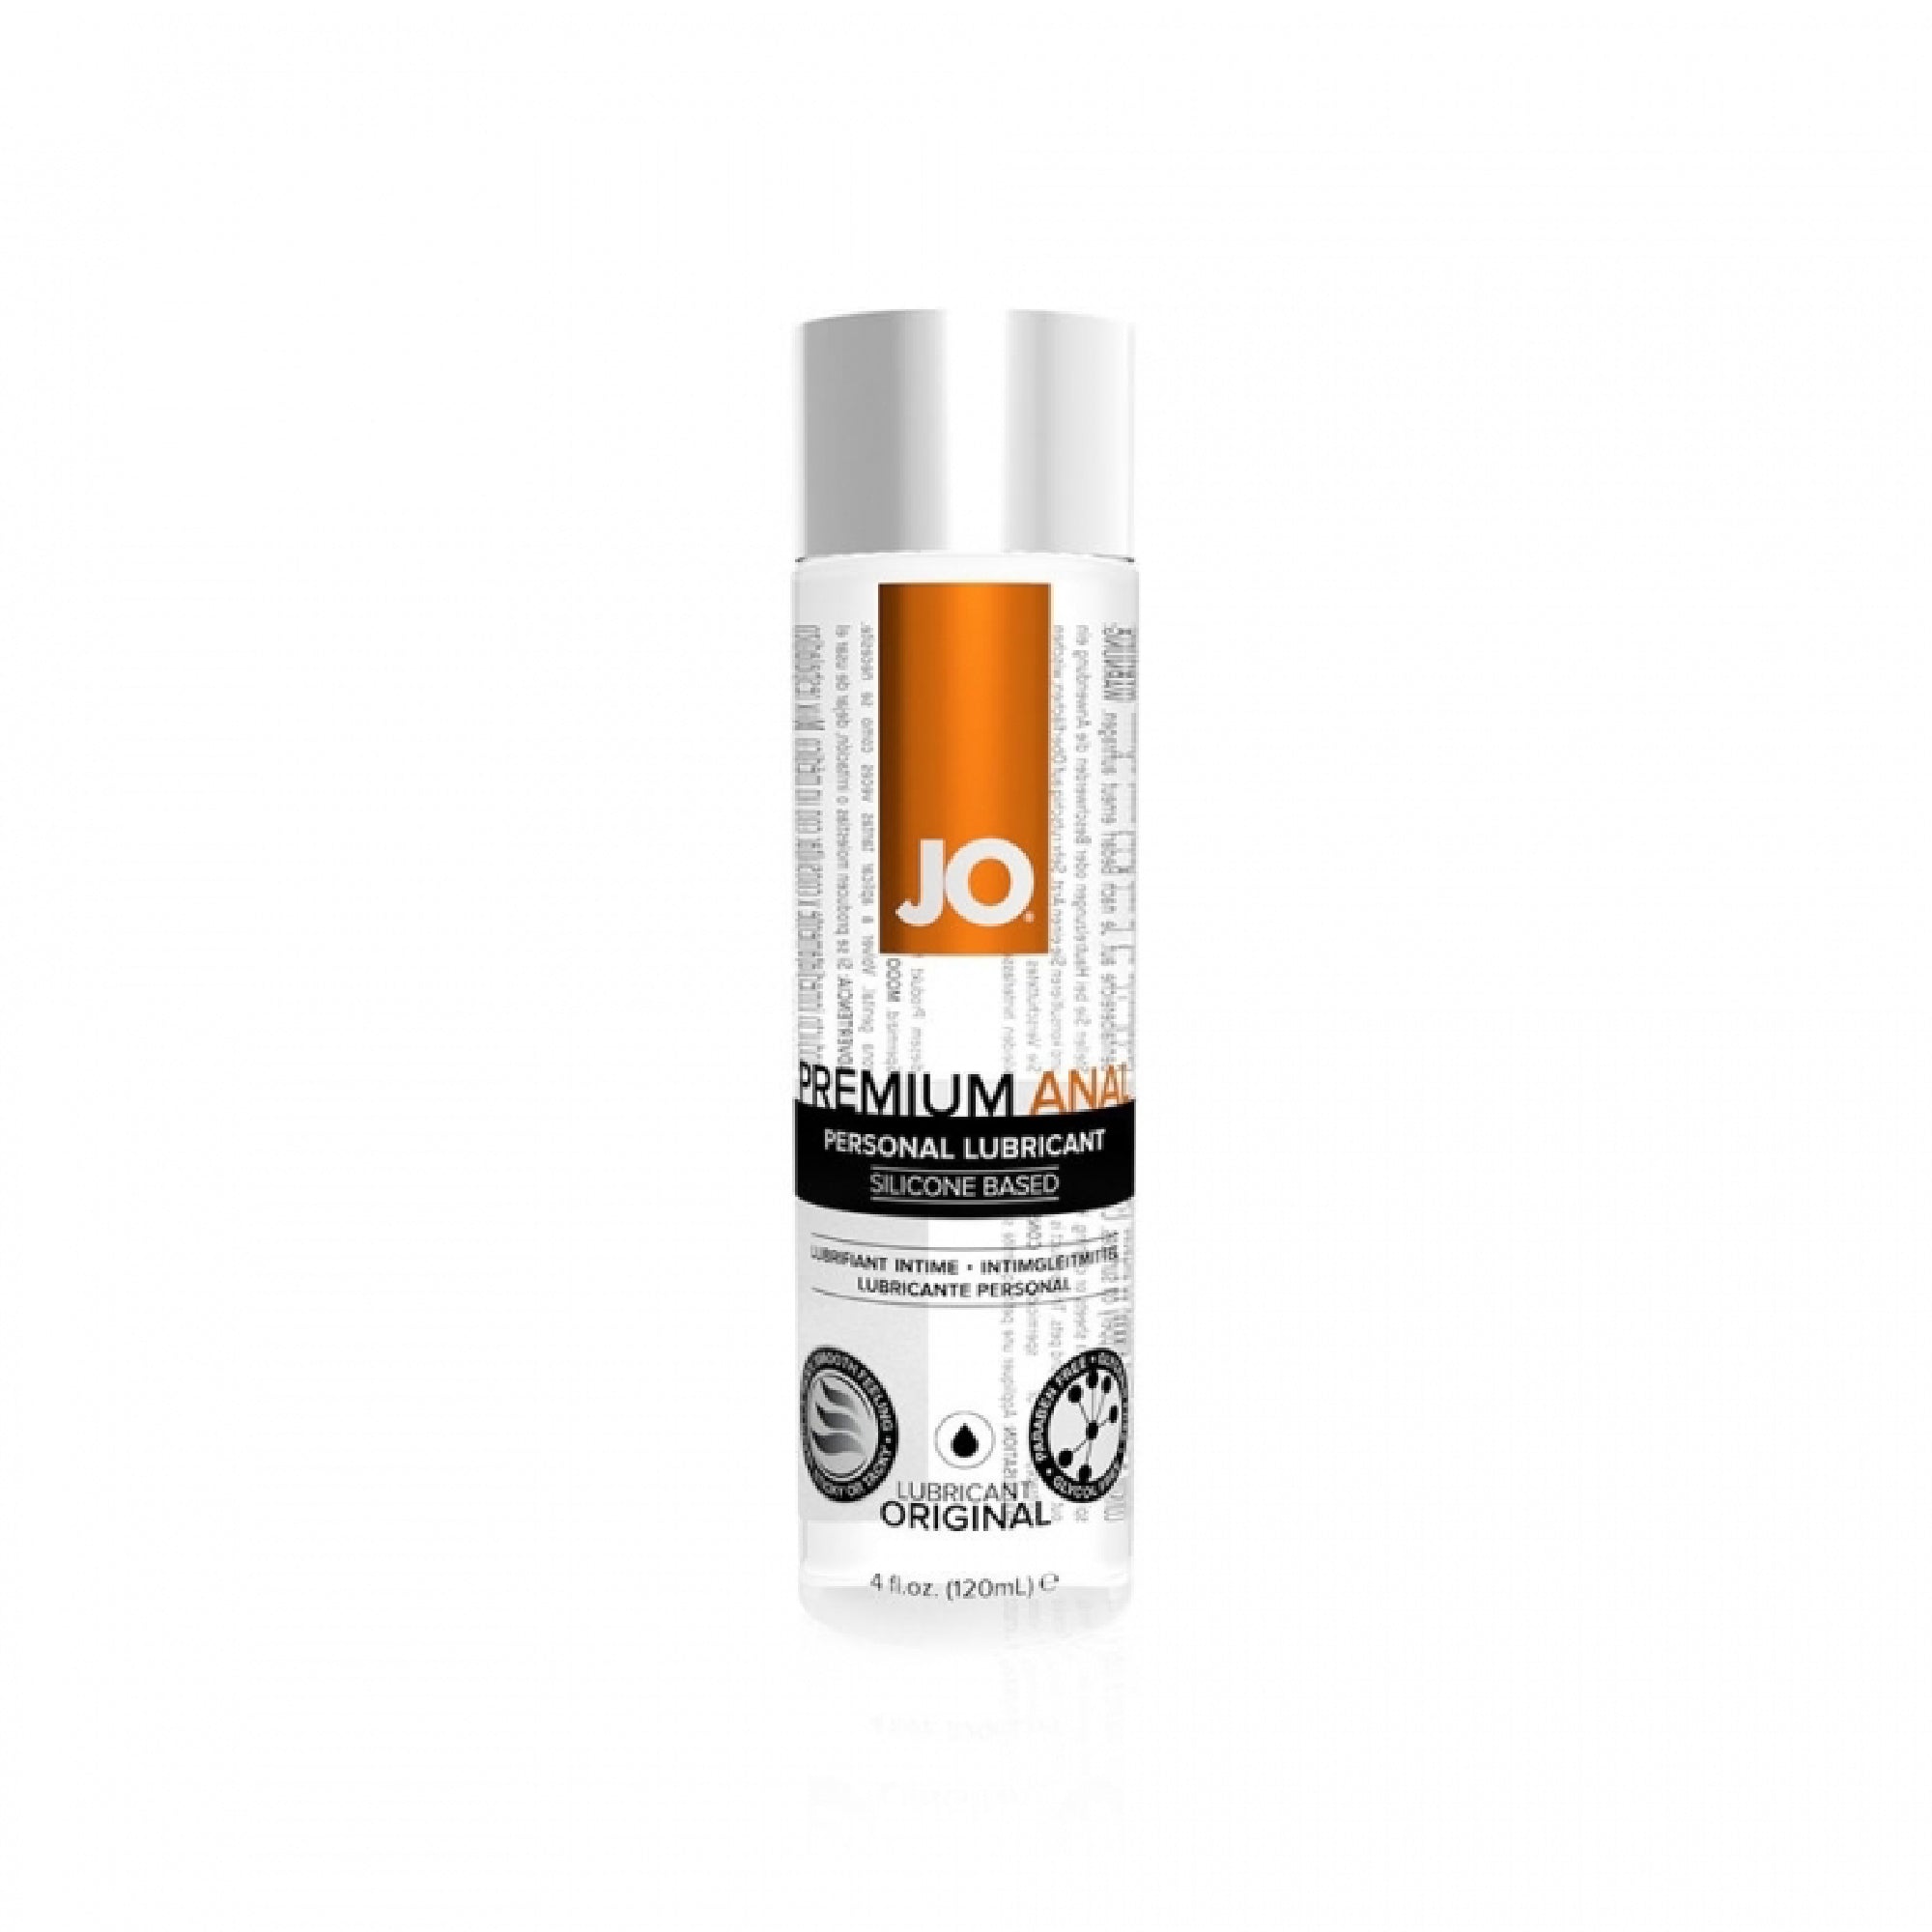 JO Premium Anal - Original - Lubricant (Silicone-Based) by Gläs